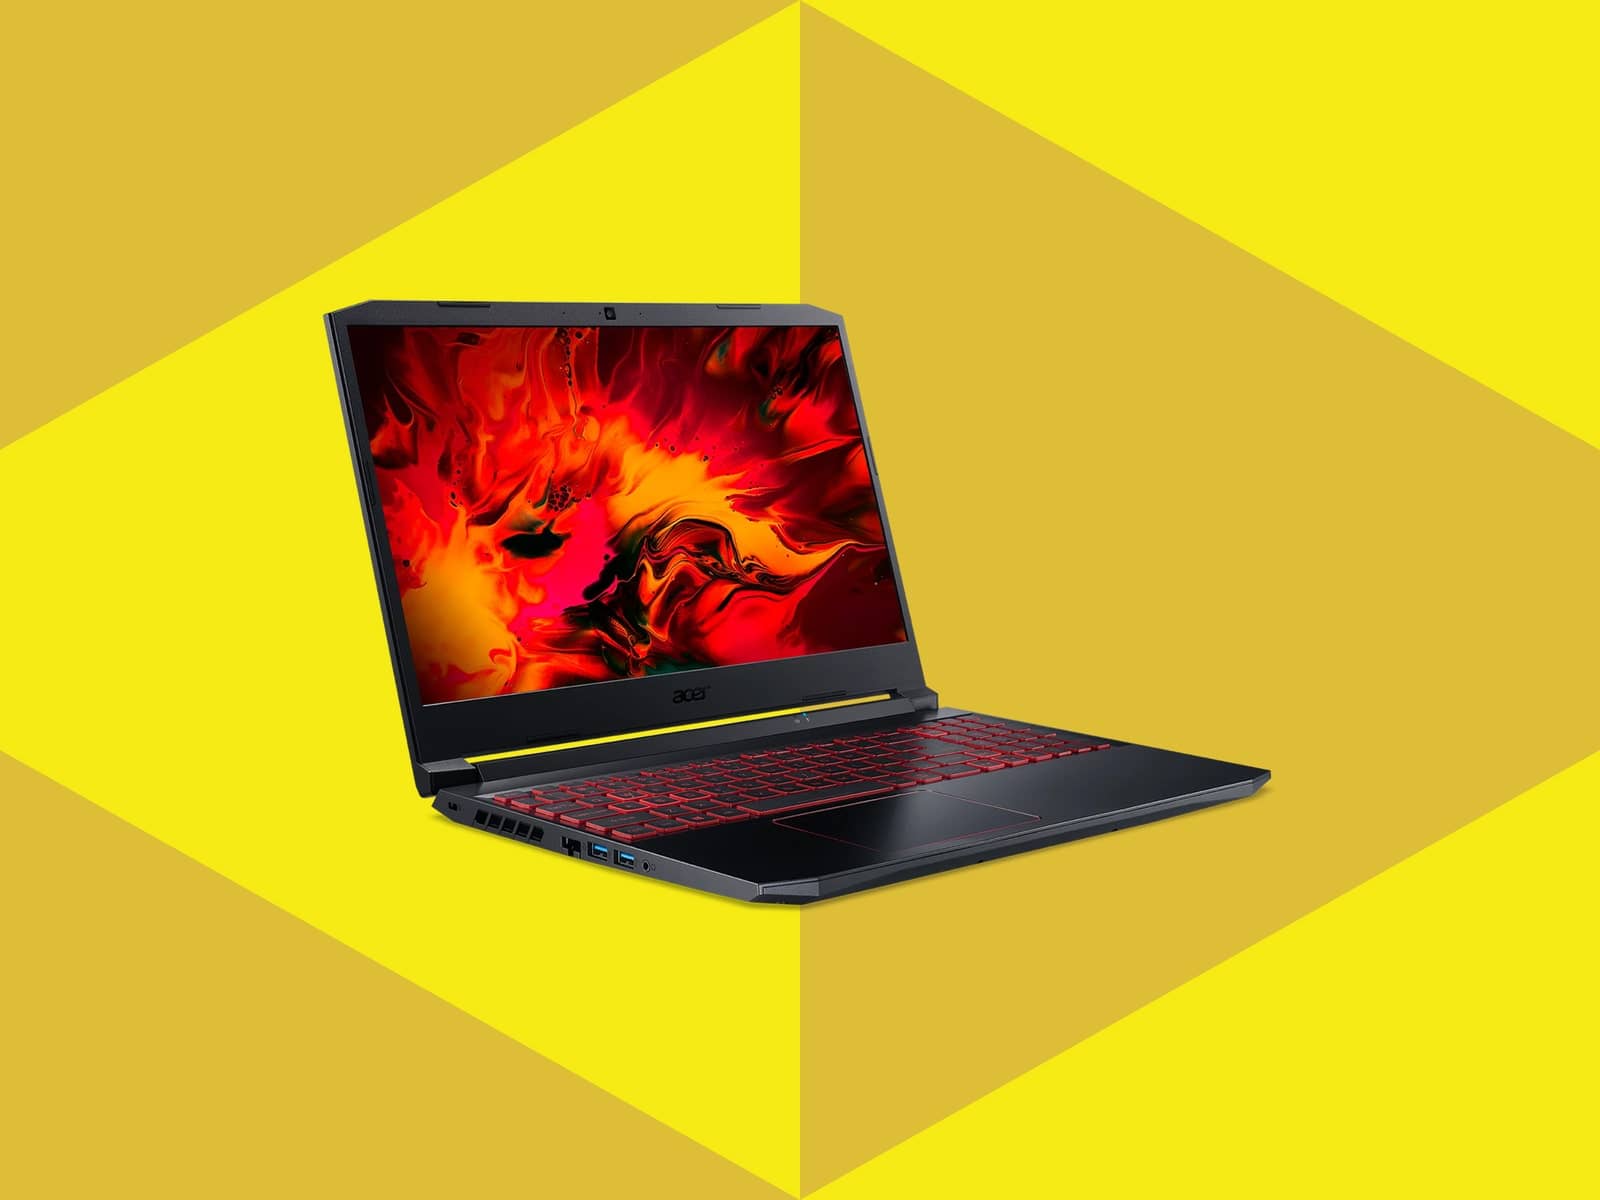 Acer Nitro 5 gaming laptop on a yellow geometric backdrop